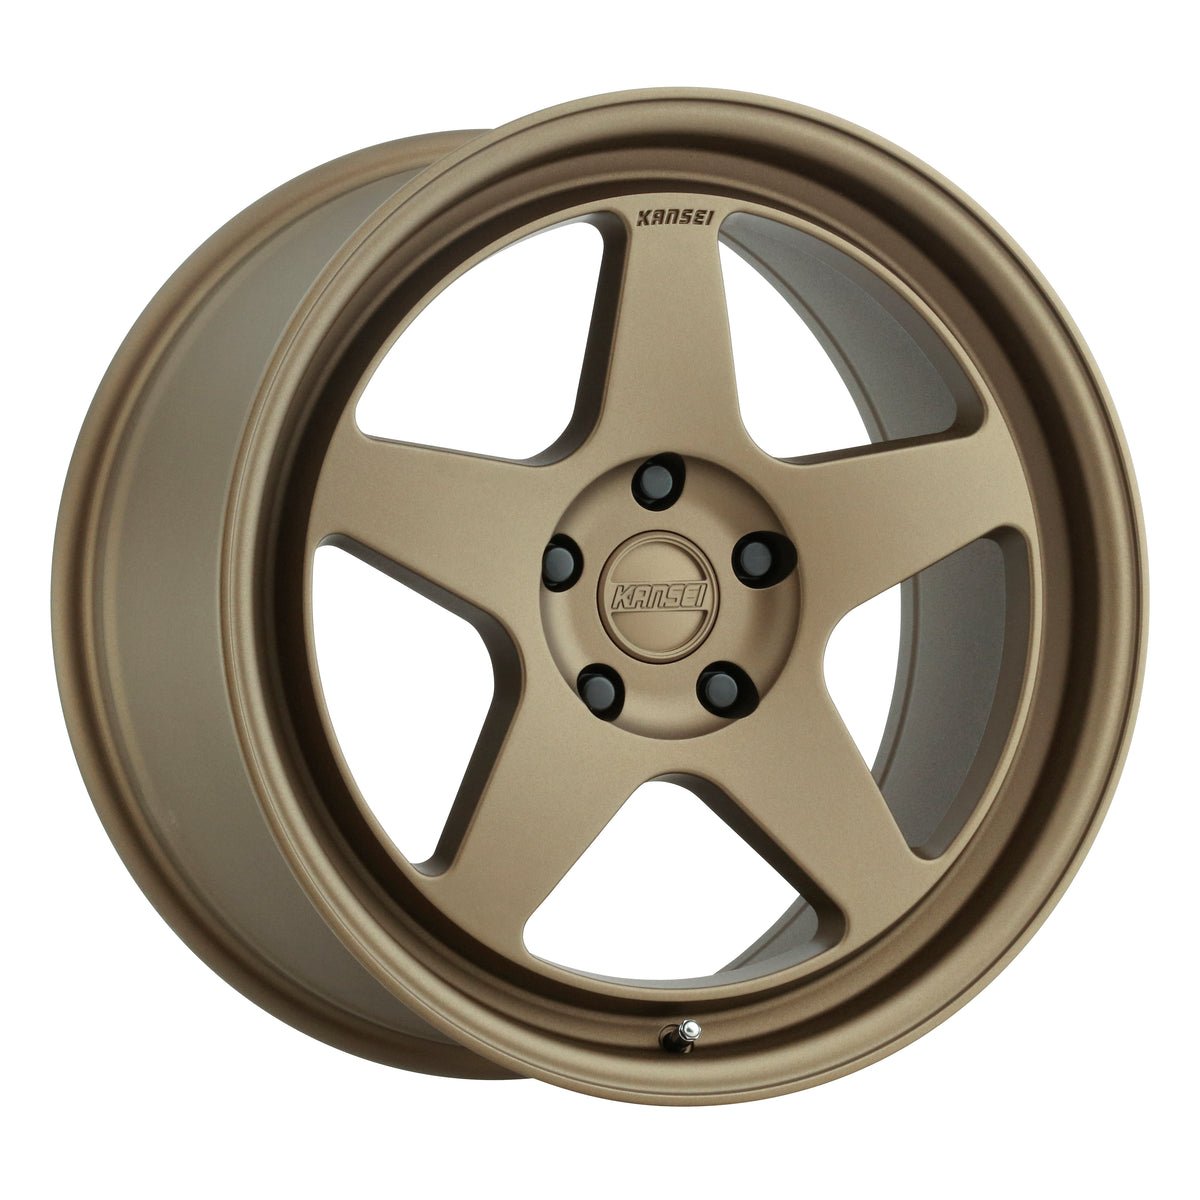 K12B KNP Wheel, Size: 17" x 8.50", Bolt Pattern: 5 x 127 mm, Backspace: 4.75" [Finish: Bronze]